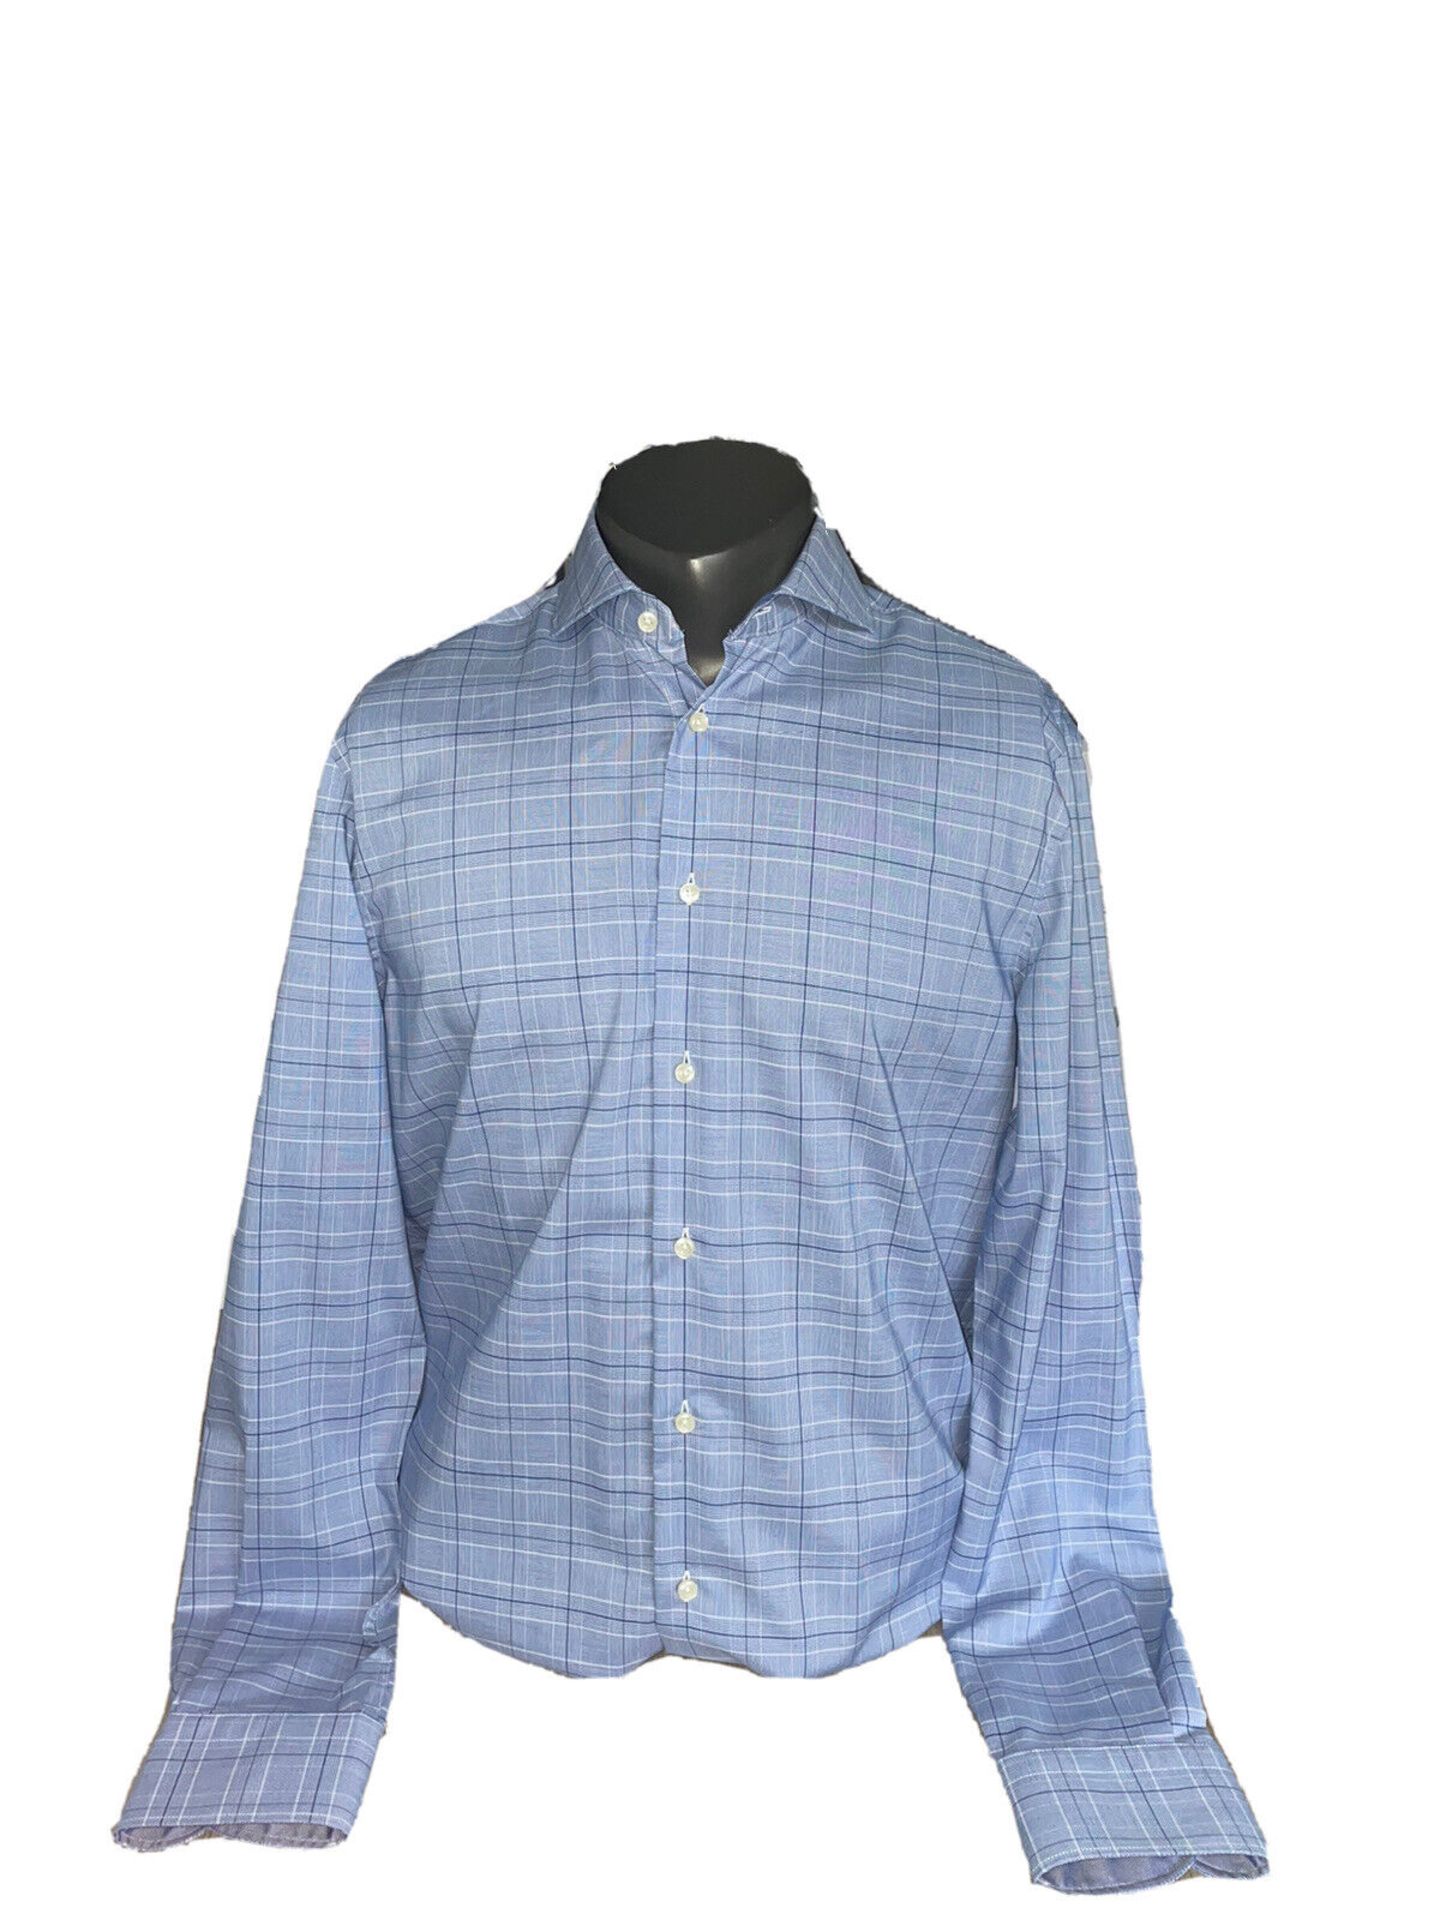 tommy hilfiger blue shirt size 39 RRP £82